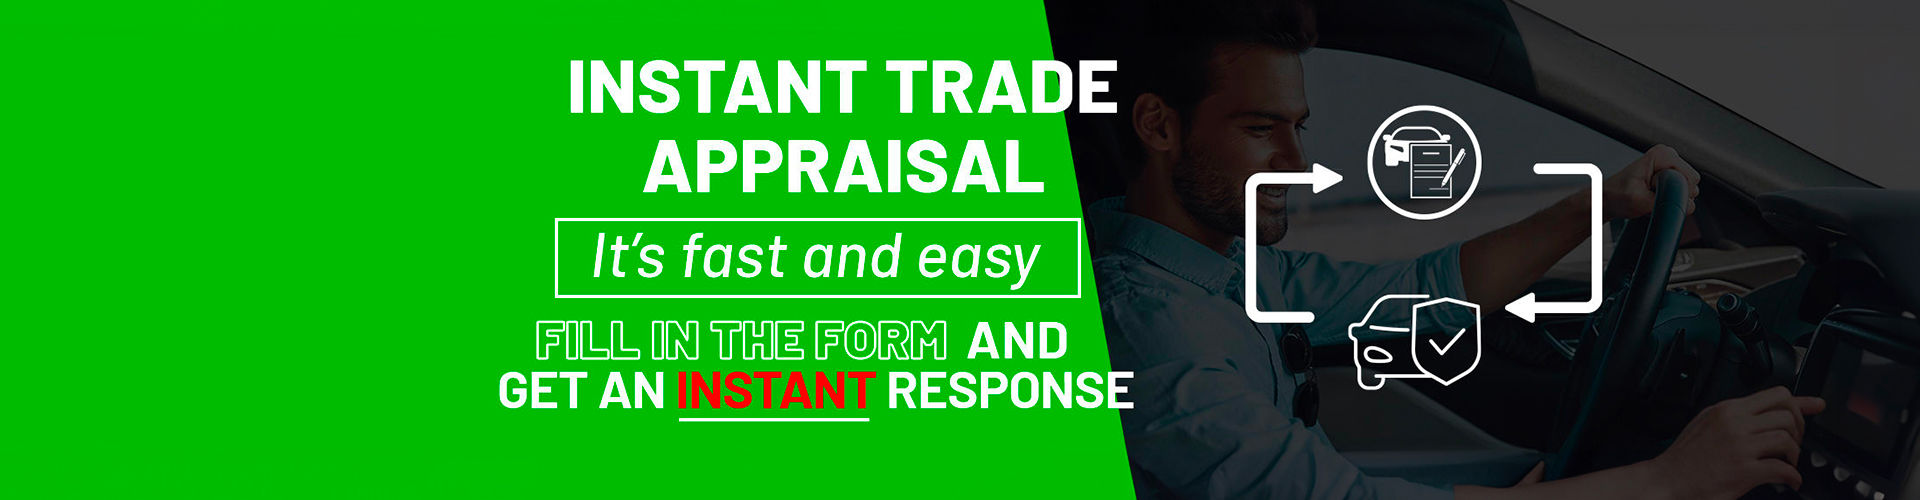 Instant Trade Appraisal